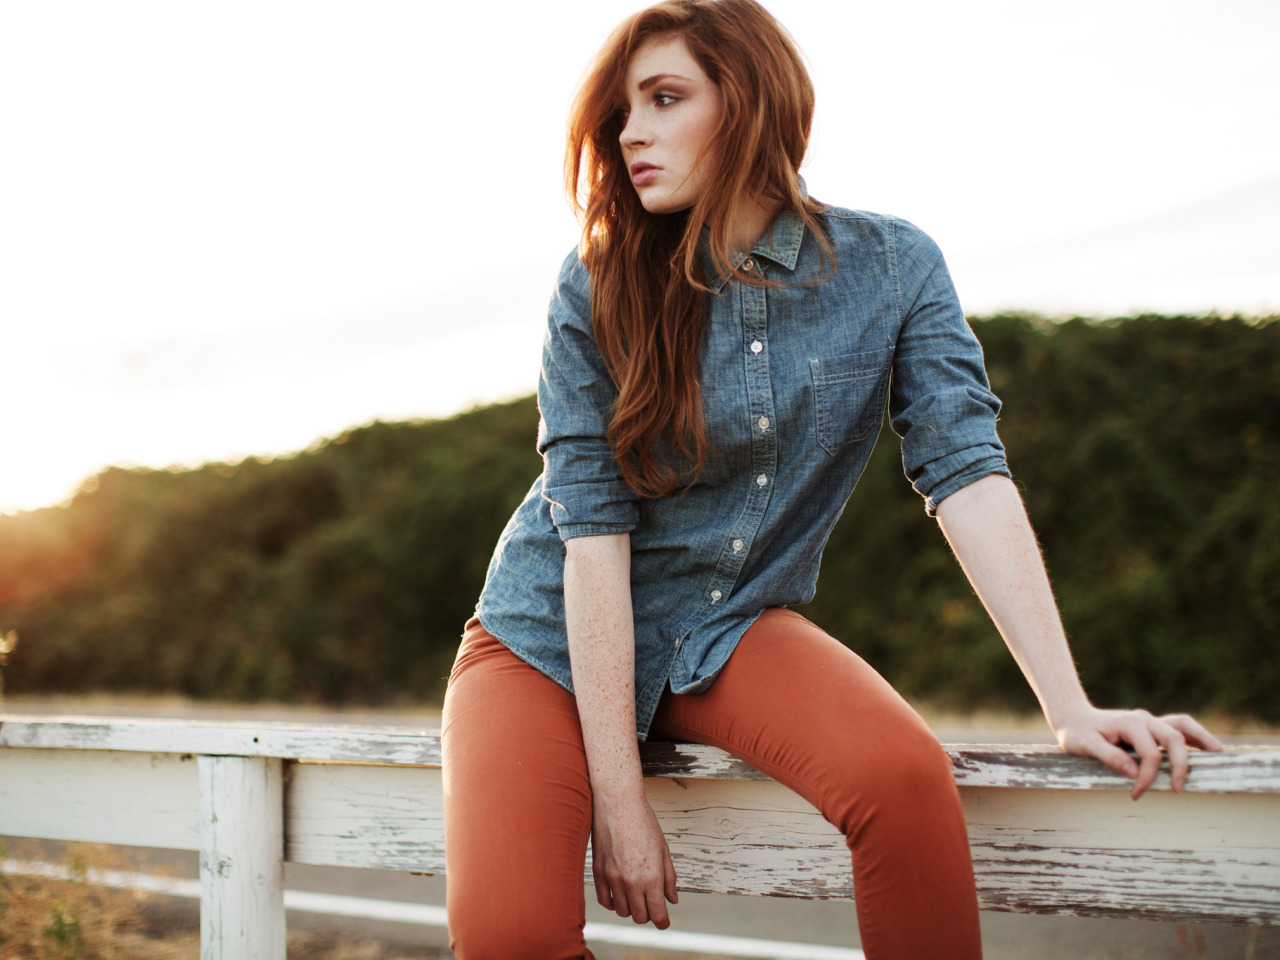 Hot Ginger Girls In Jeans